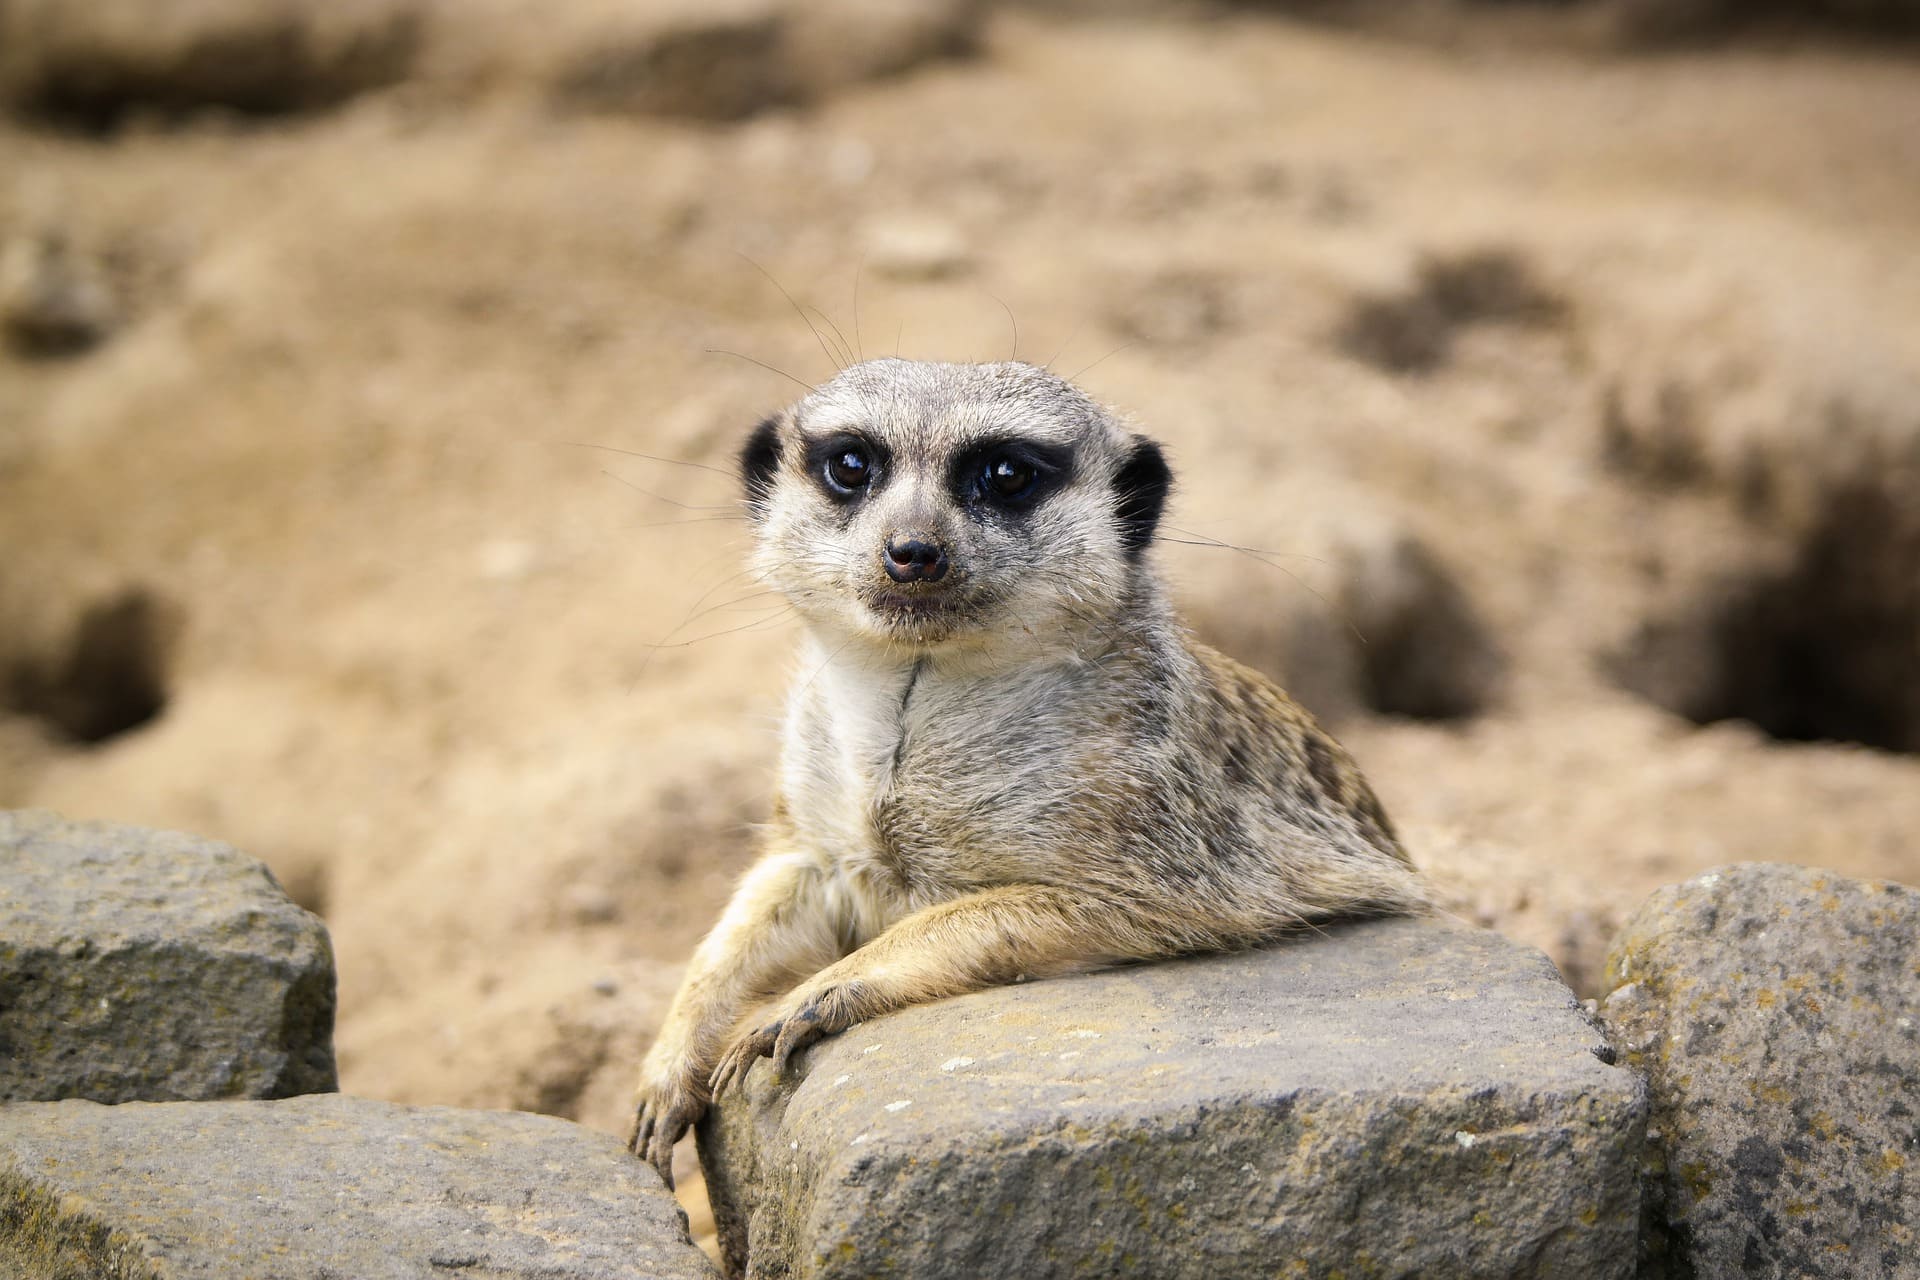 Do Meerkats Make Good Pets? (Legality, Care & More) | Pet Keen